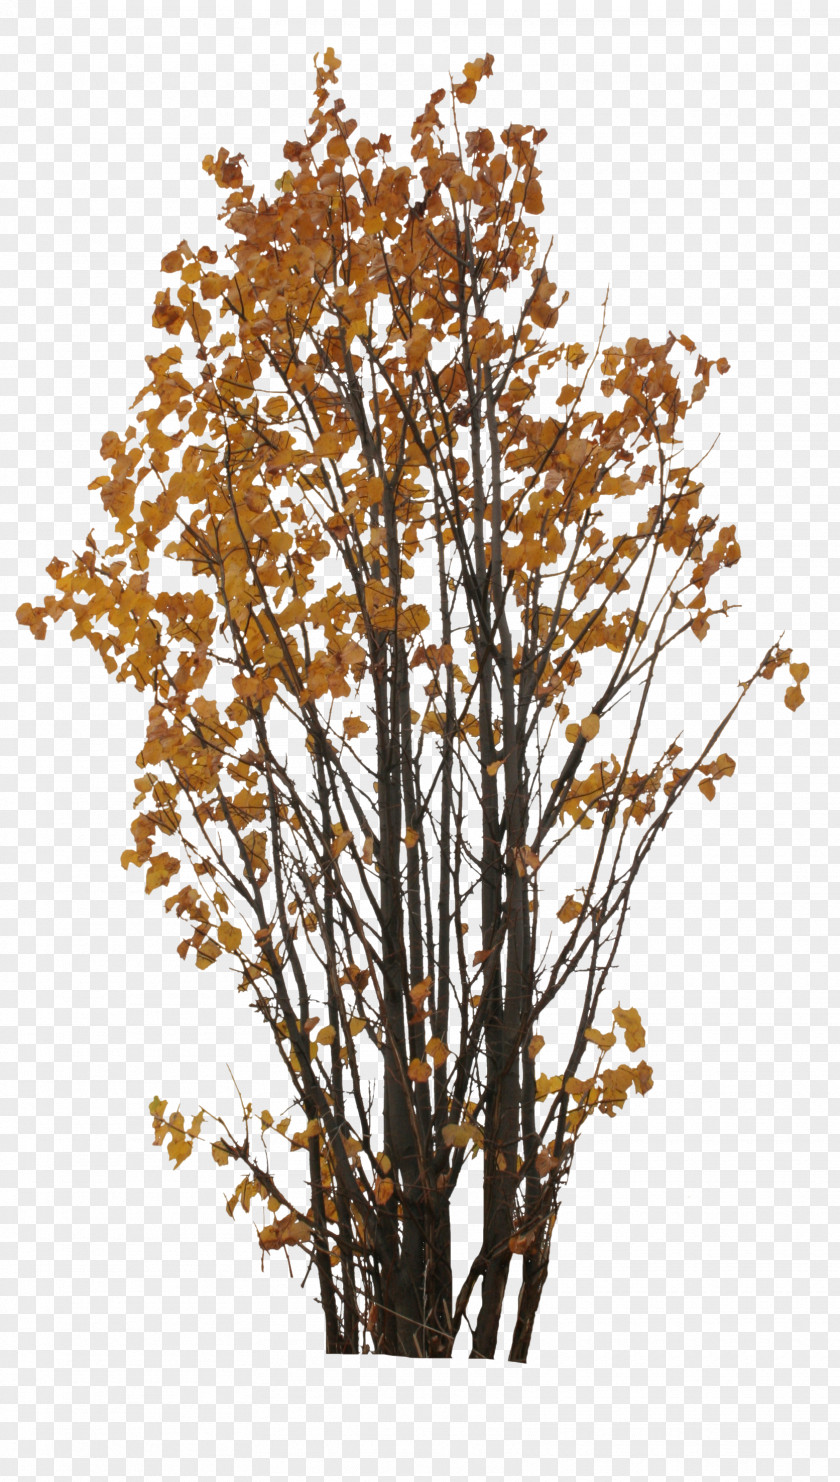 Orange Tree Branch Twig Plant Leaf PNG